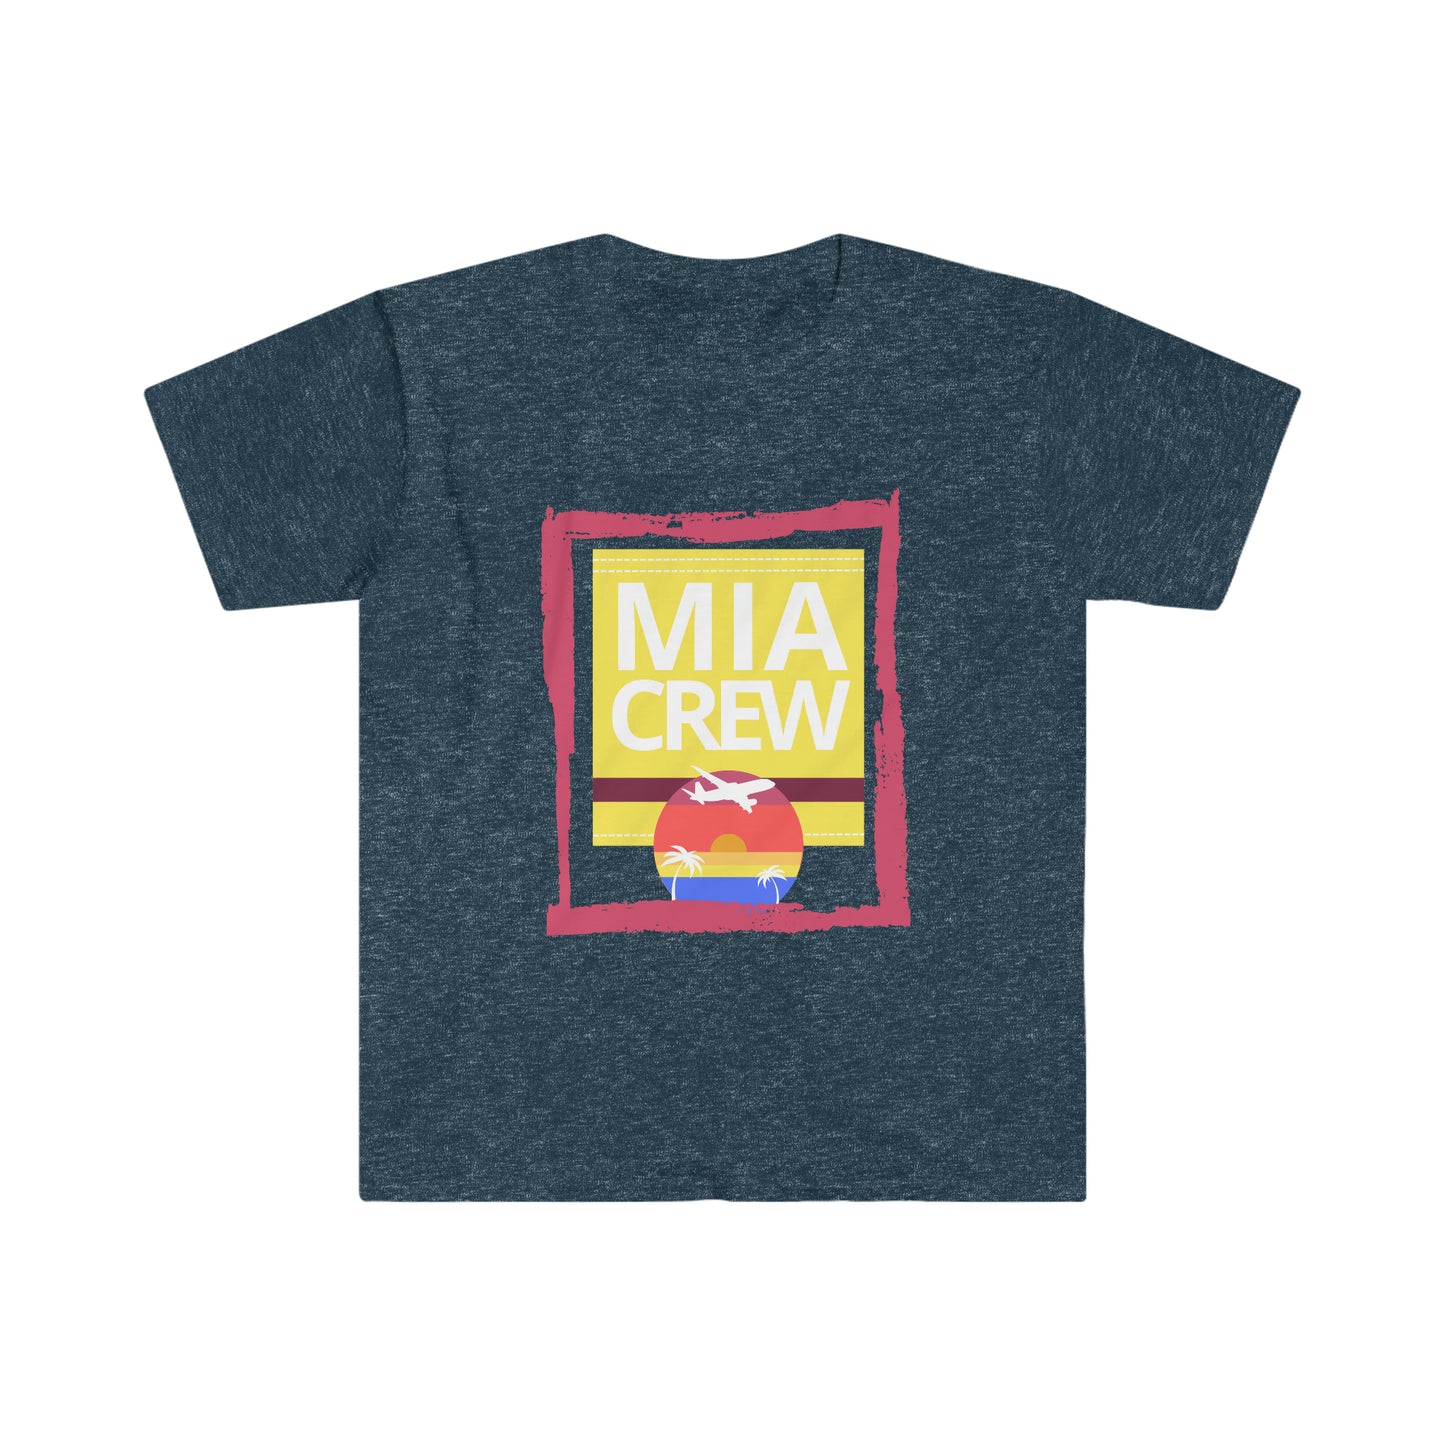 MIA Airport Crew T-shirt for Miami International Airport